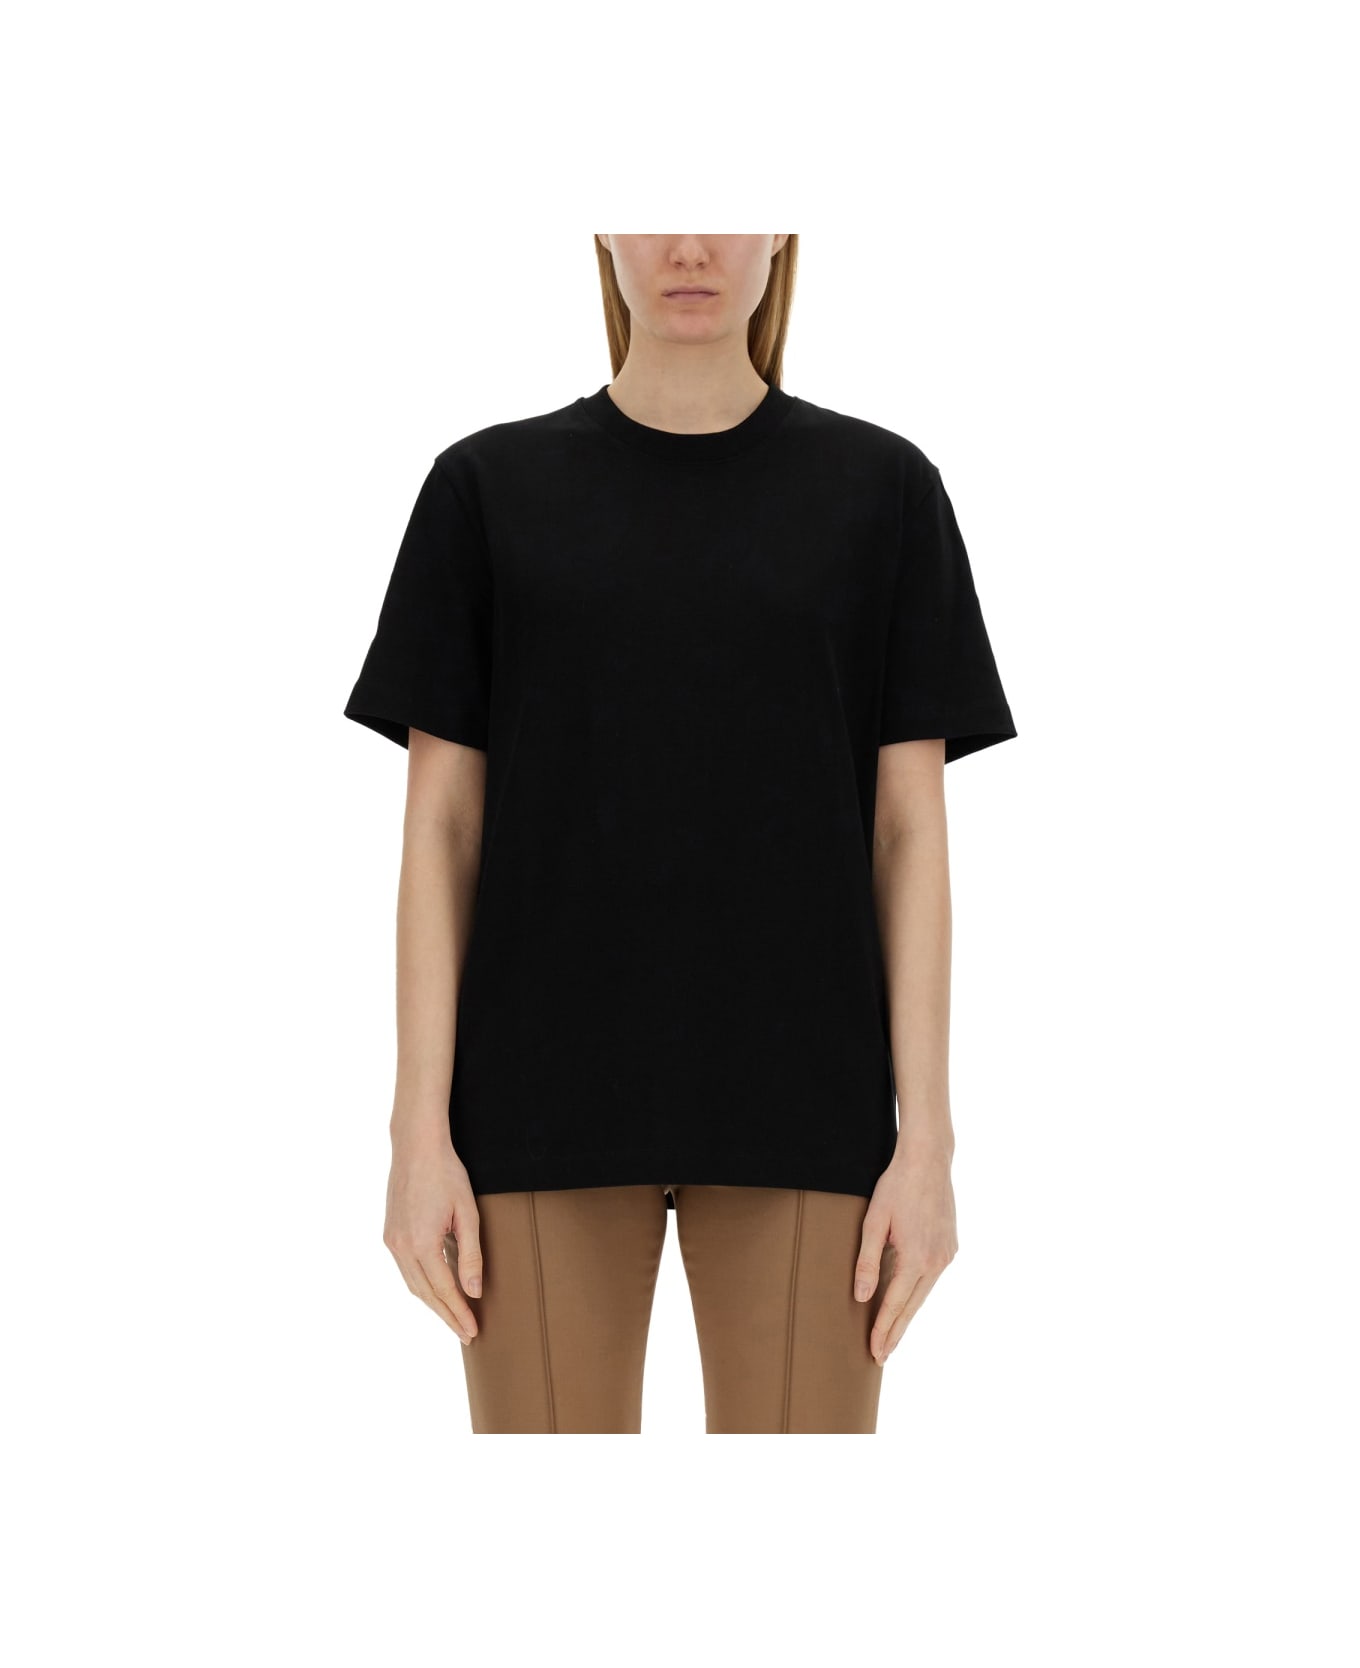 Helmut Lang T-shirt With Logo - BLACK